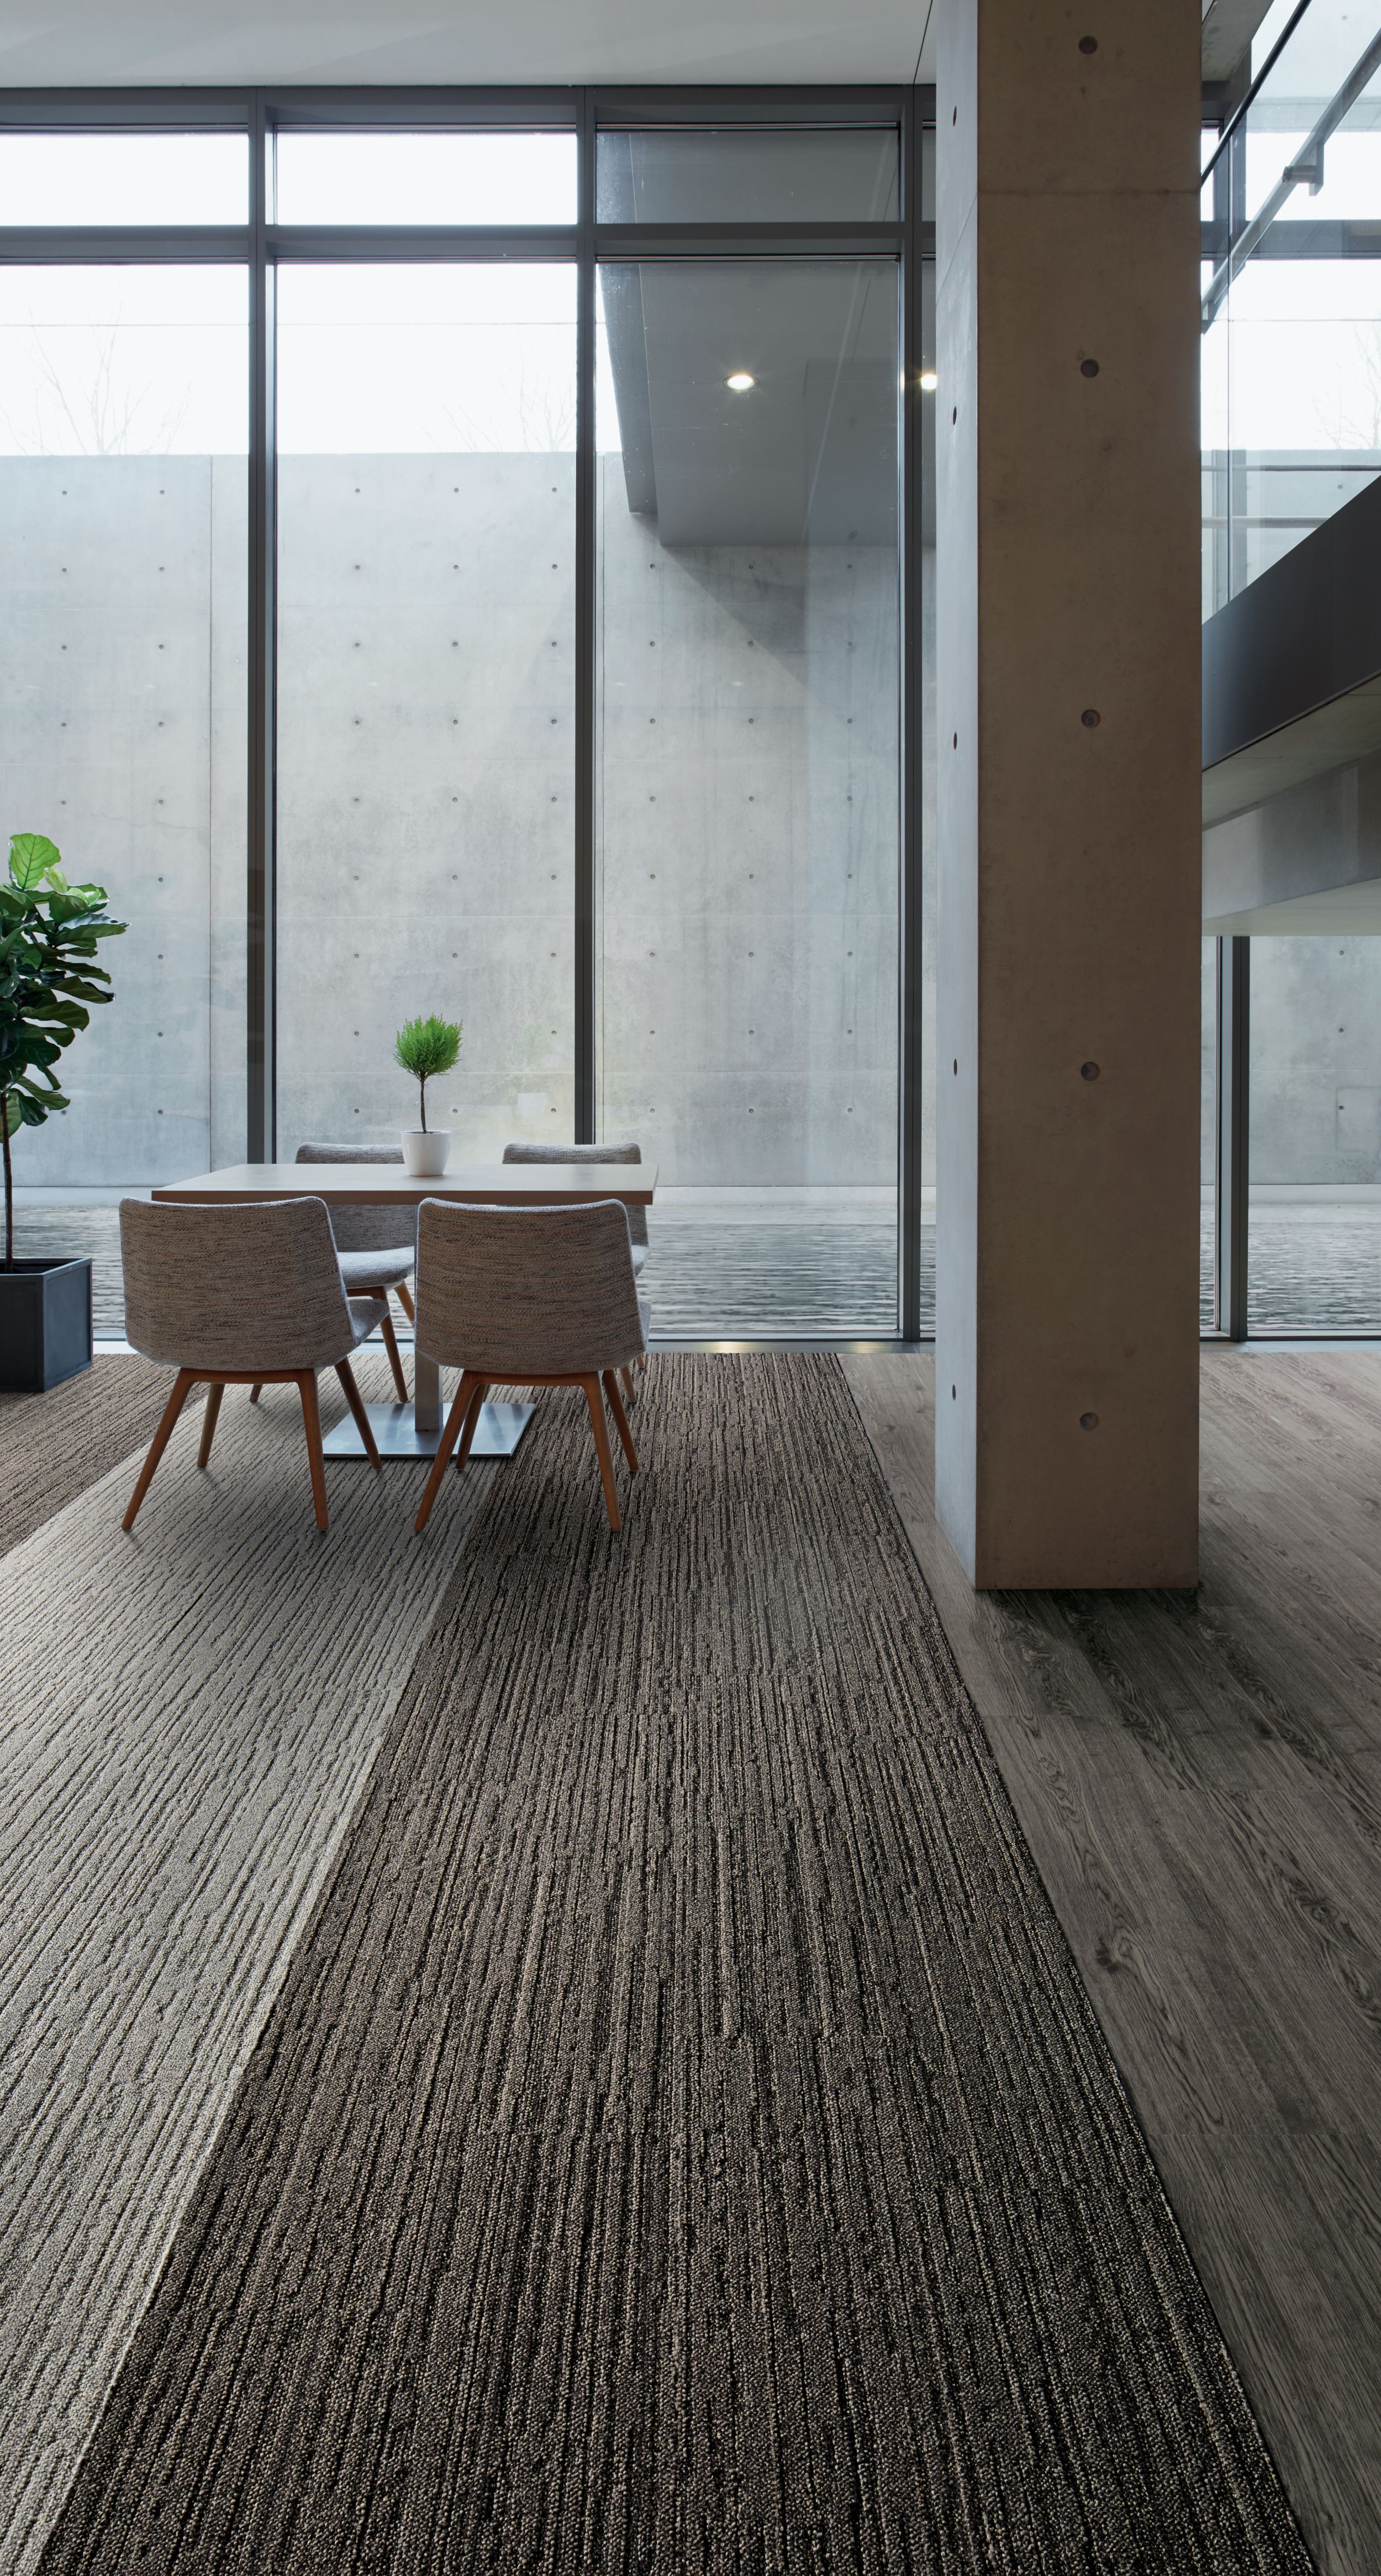 Interface WW880 plank carpet tile and Natural Woodgrains LVT in office common area imagen número 6